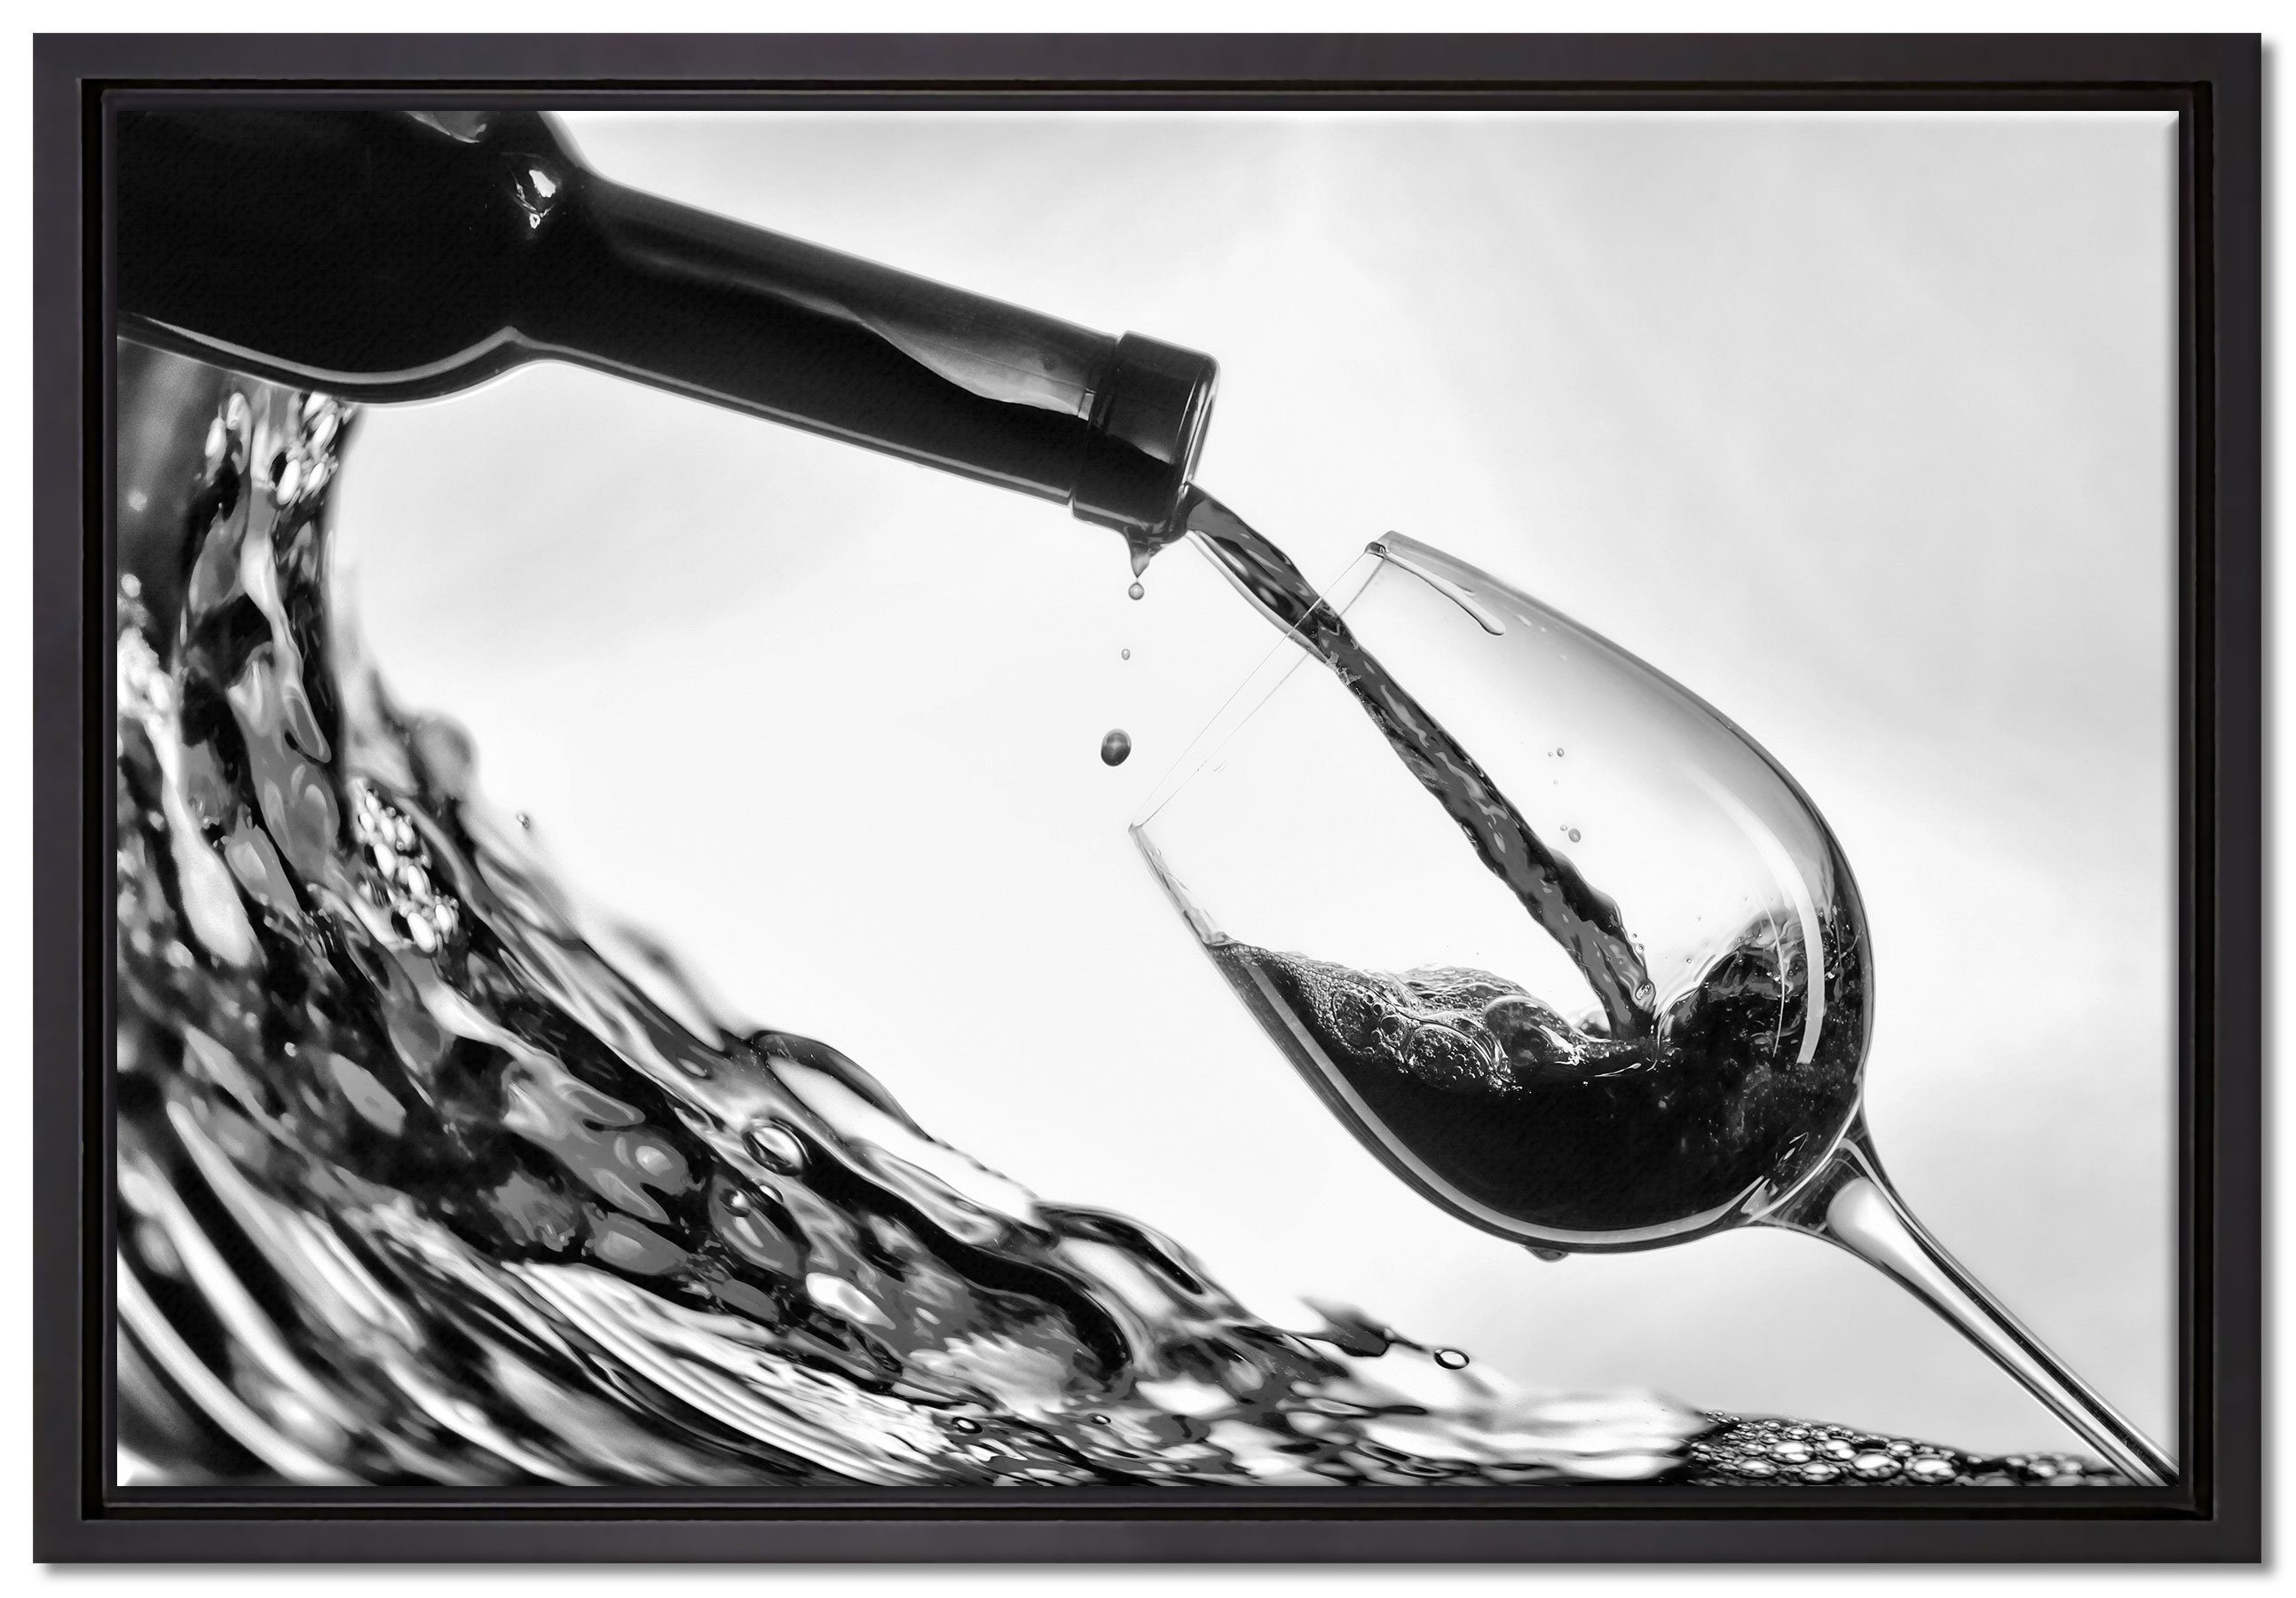 Pixxprint Leinwandbild Wein, Wanddekoration (1 St), Leinwandbild fertig bespannt, in einem Schattenfugen-Bilderrahmen gefasst, inkl. Zackenaufhänger